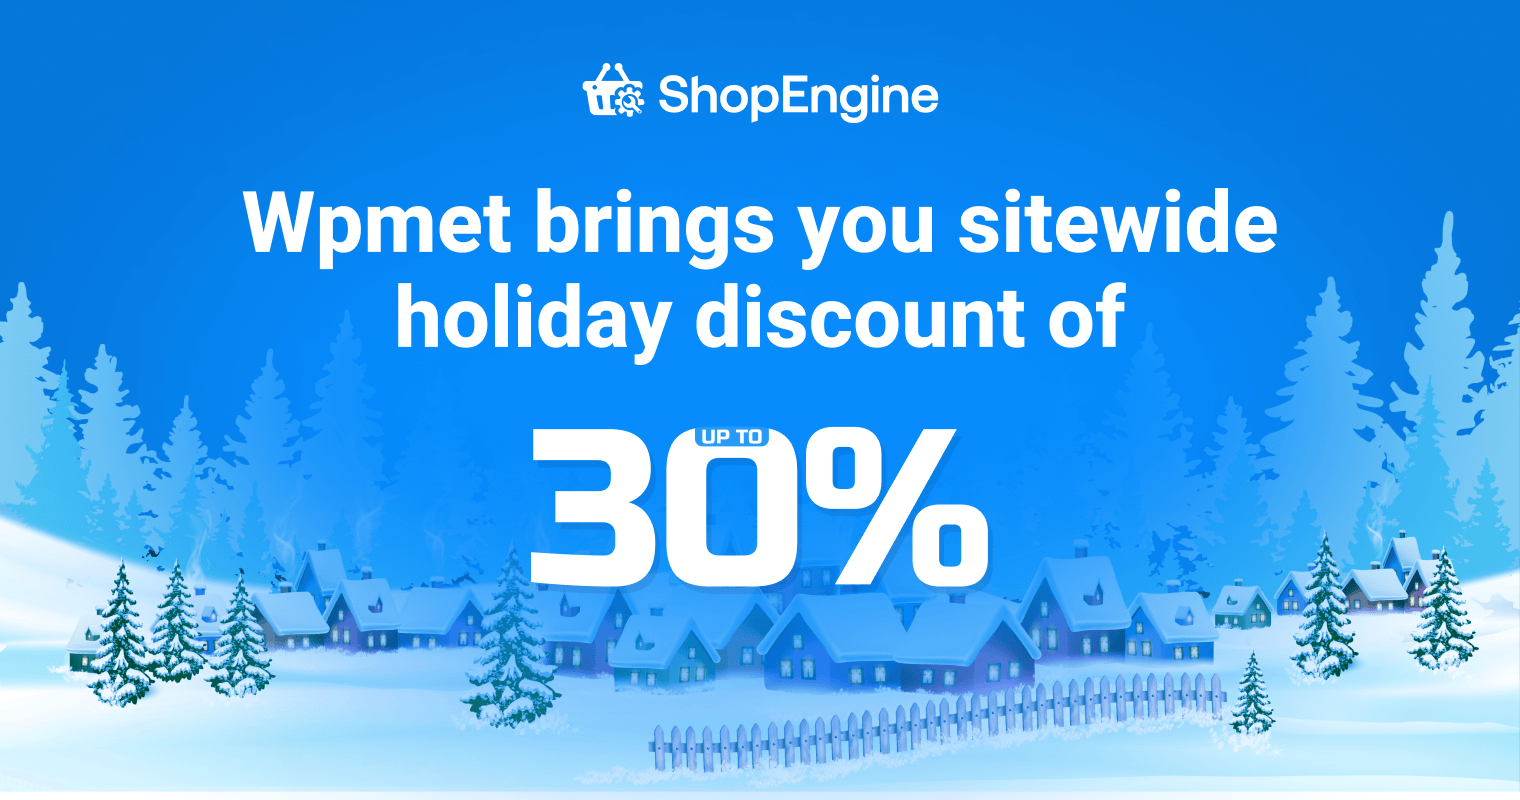 ShopEngine holiday deals